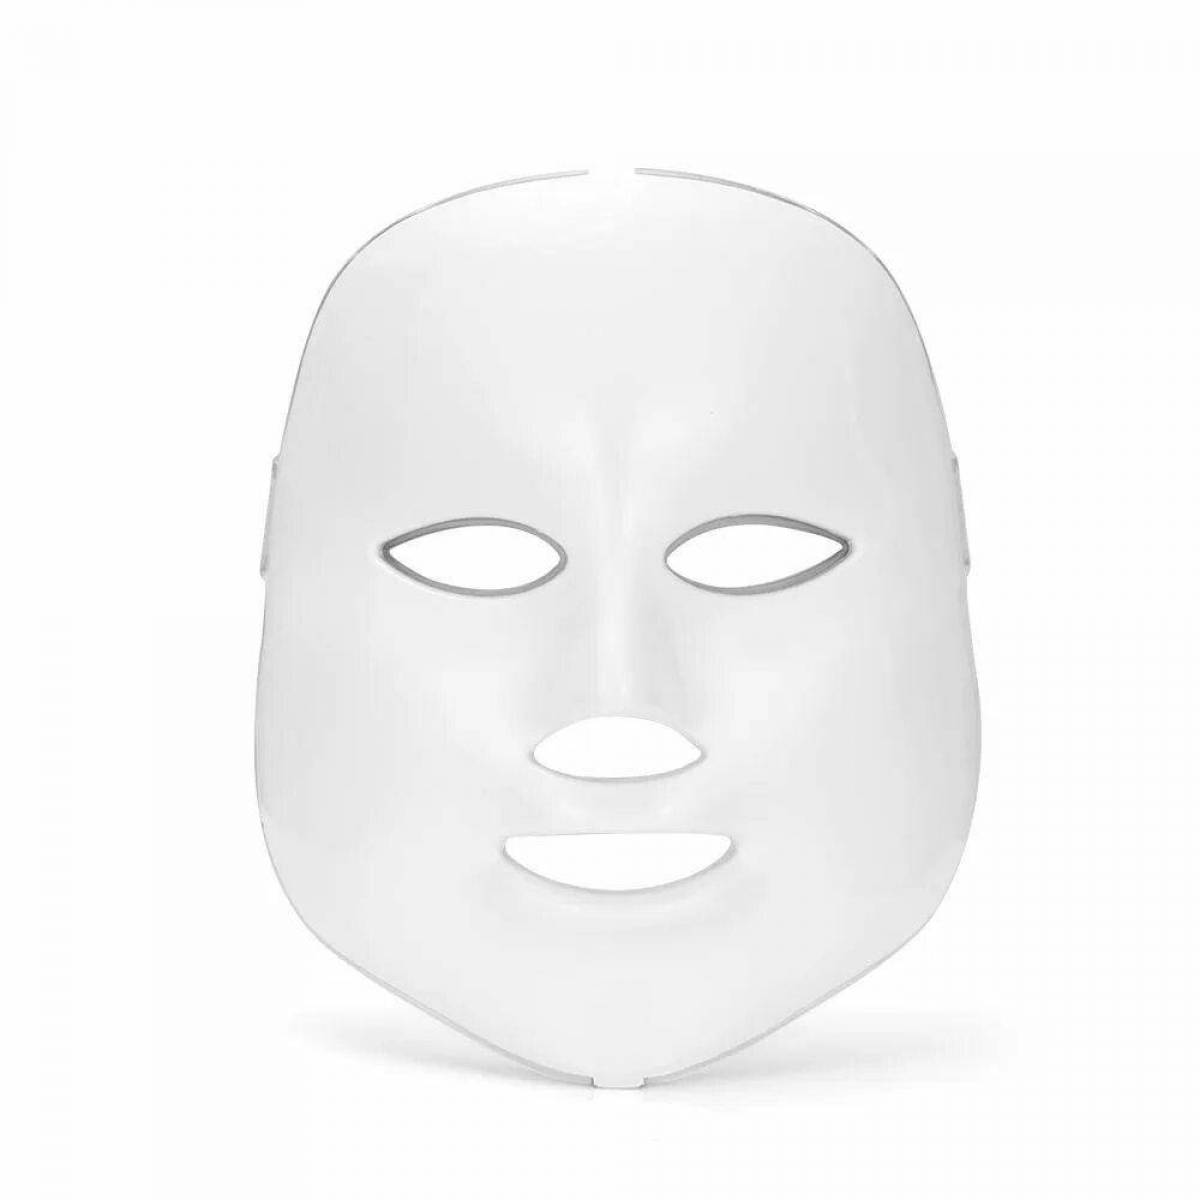 Fun Moisturizing Face Masks Coloring Page